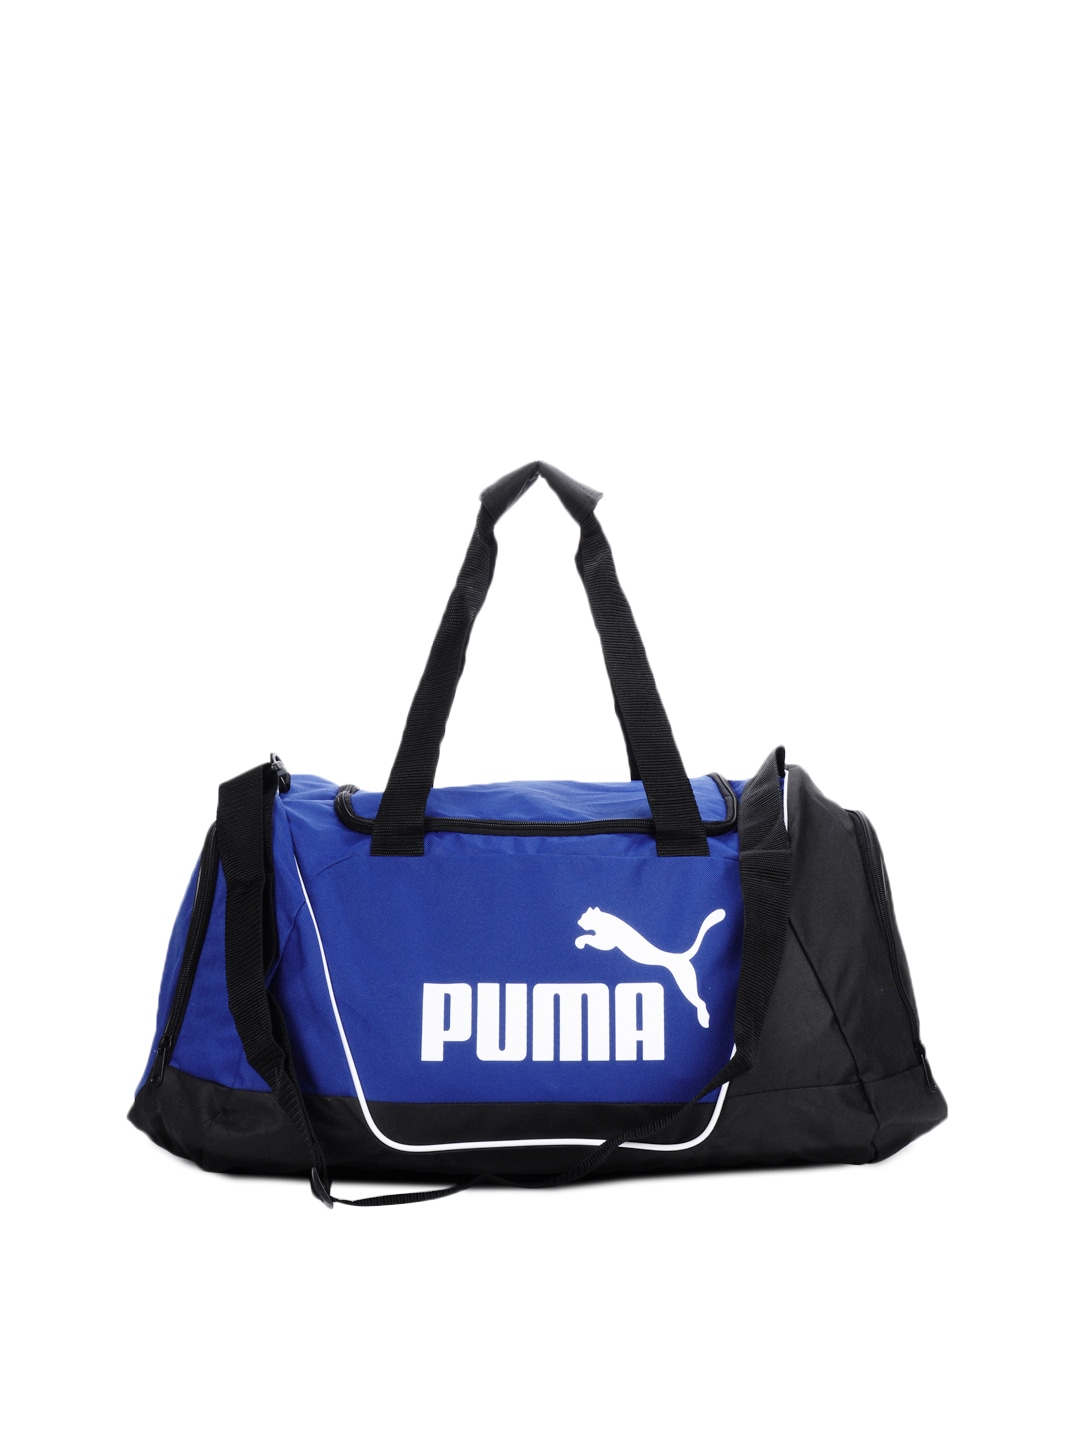 Puma Unisex Blue Duffle Bag